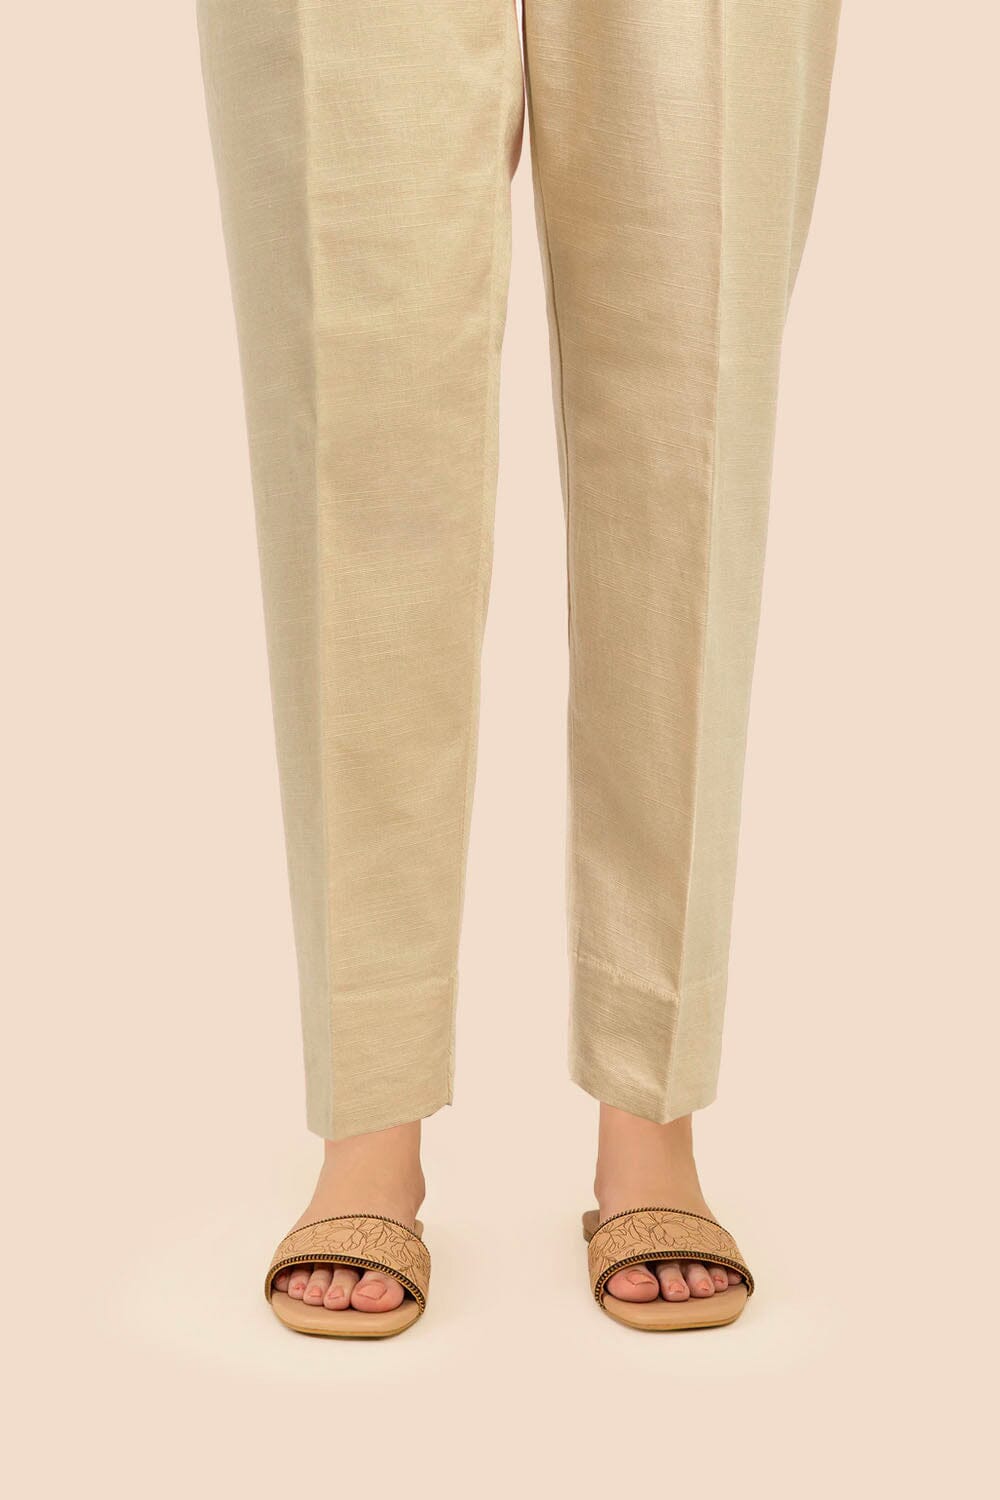 2 PIECE / SHIRT AND TROUSER ONLY- KHADDAR | Trousers, Shirts, Trouser design